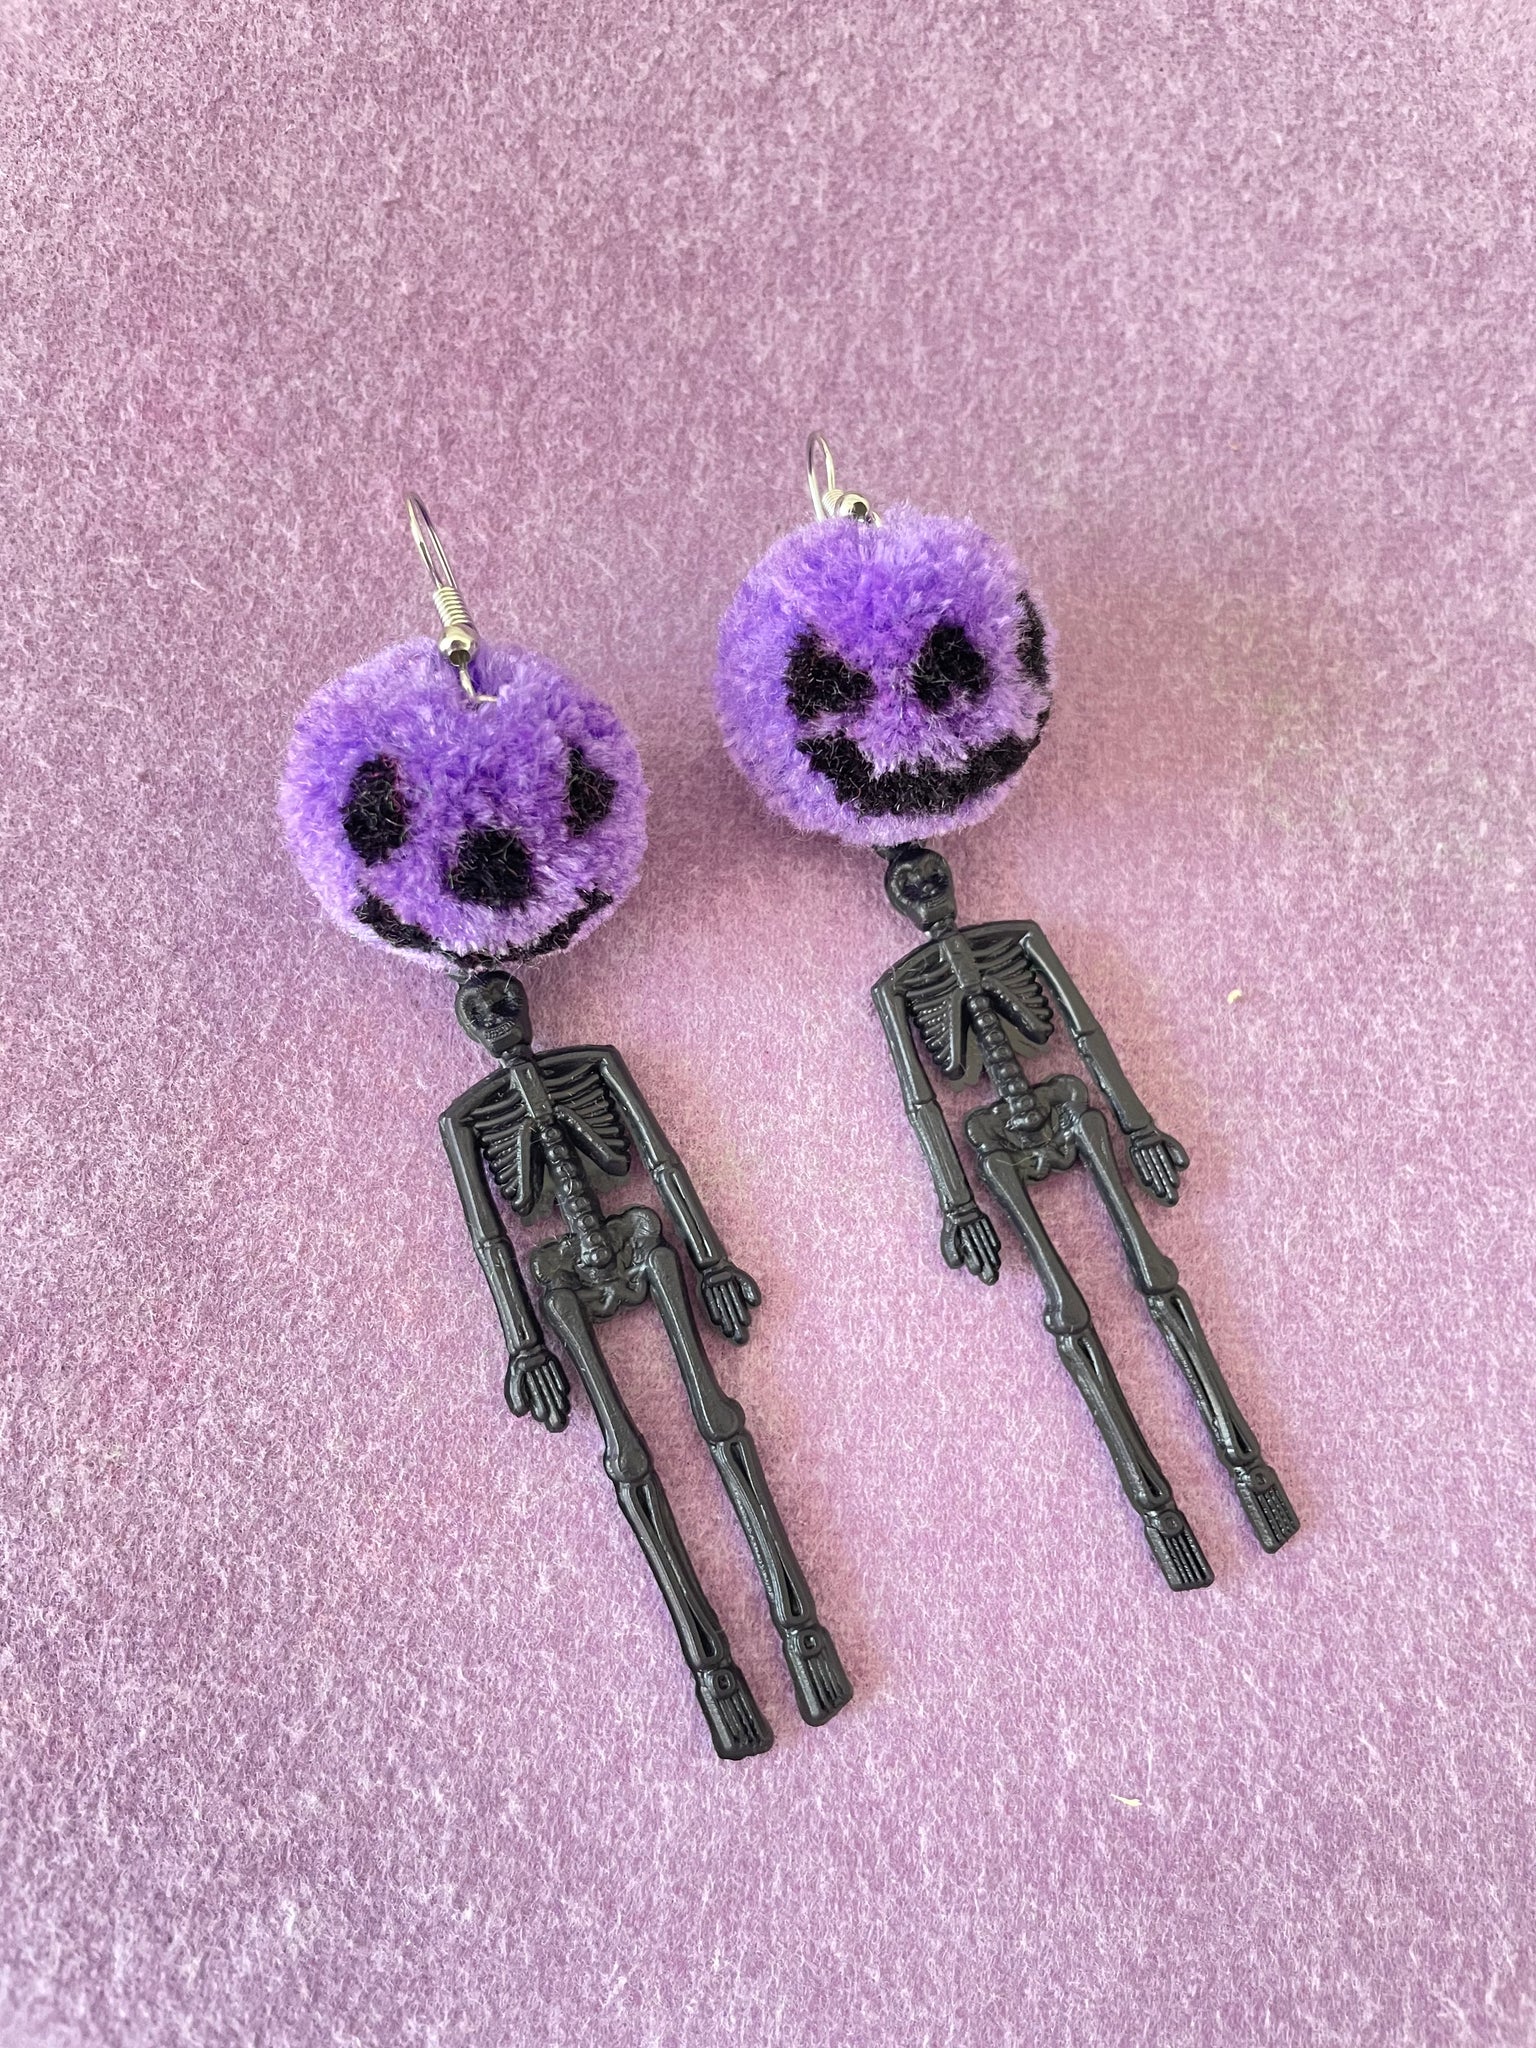 Pumpkin skeleton pompom earrings